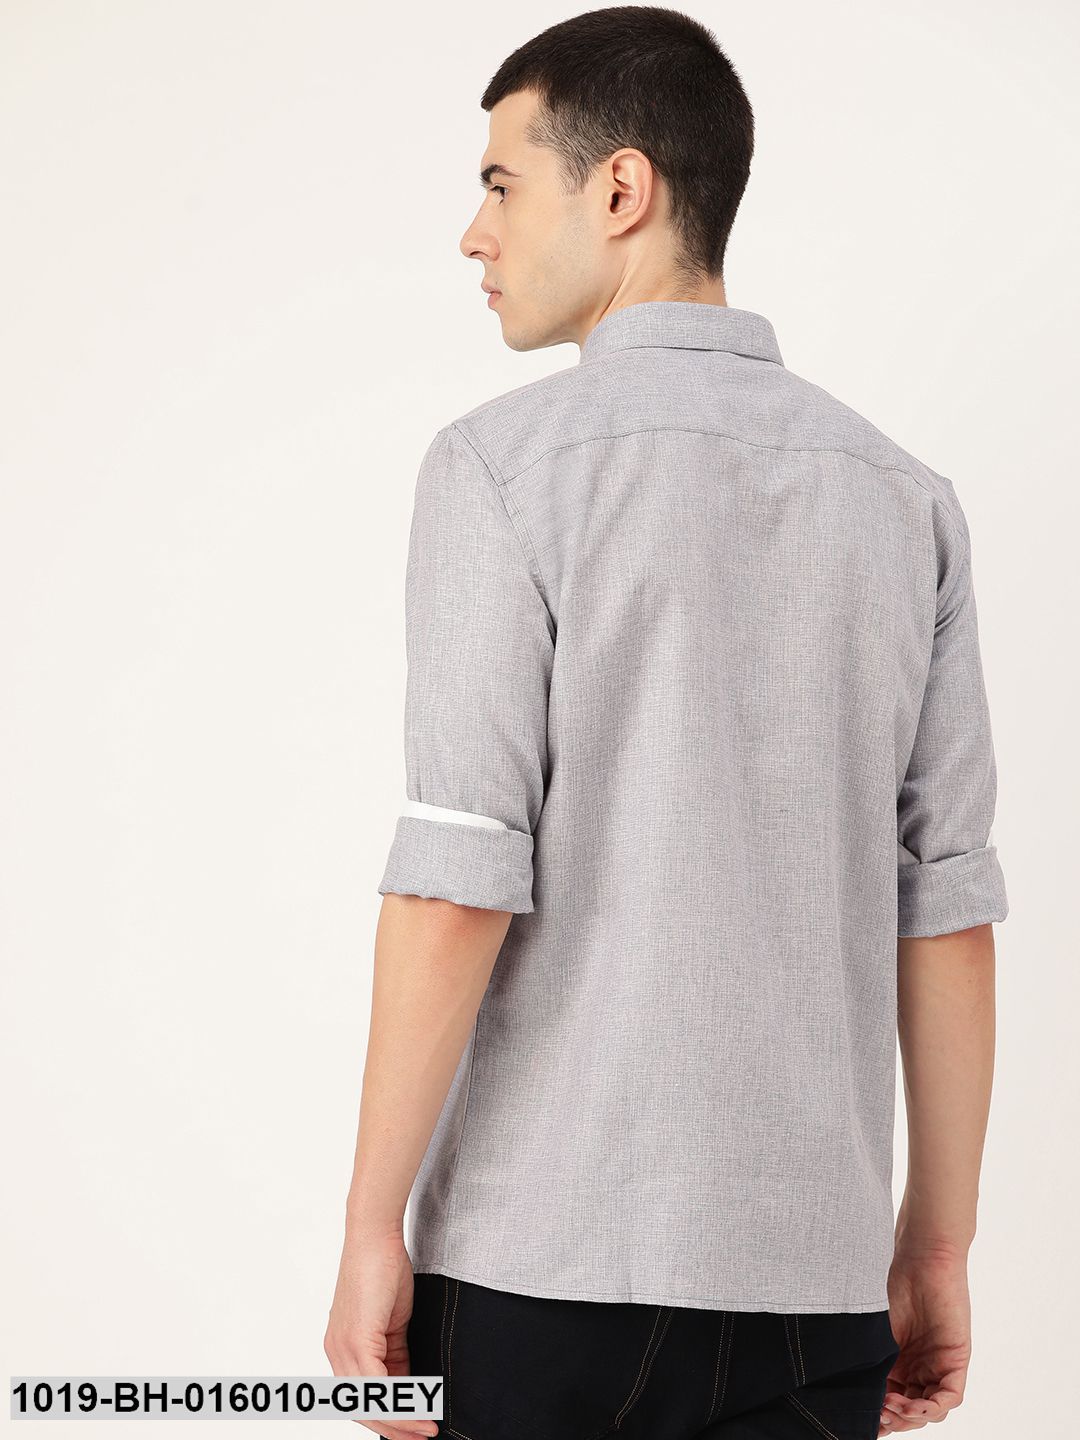 Men's Cotton Linen Light Grey Casual Shirt - Sojanya